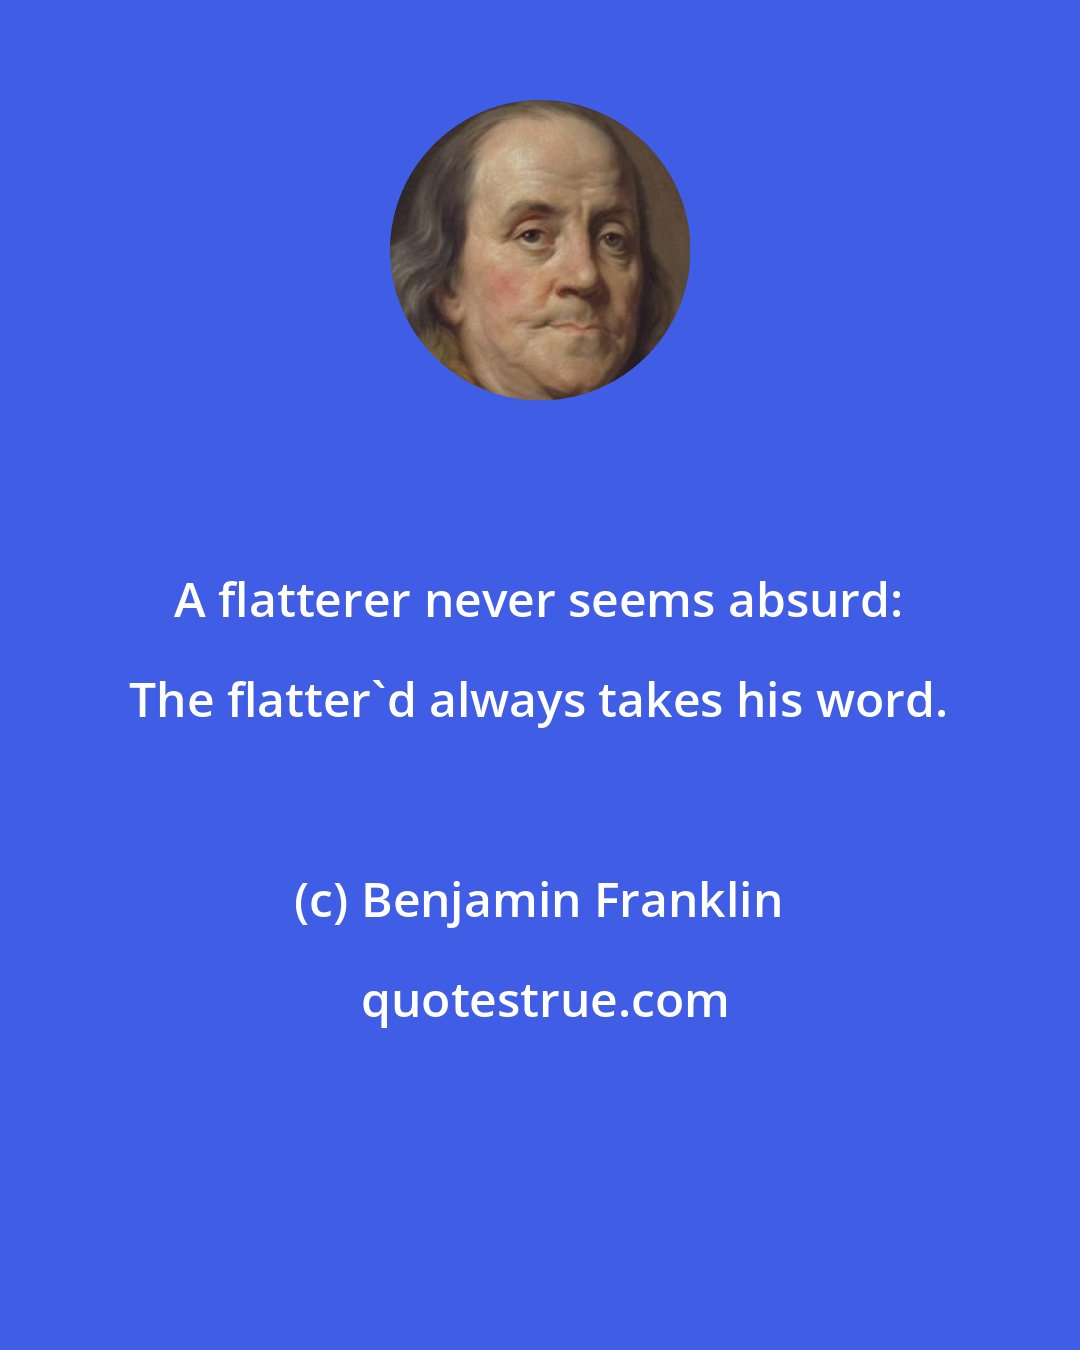 Benjamin Franklin: A flatterer never seems absurd: The flatter'd always takes his word.